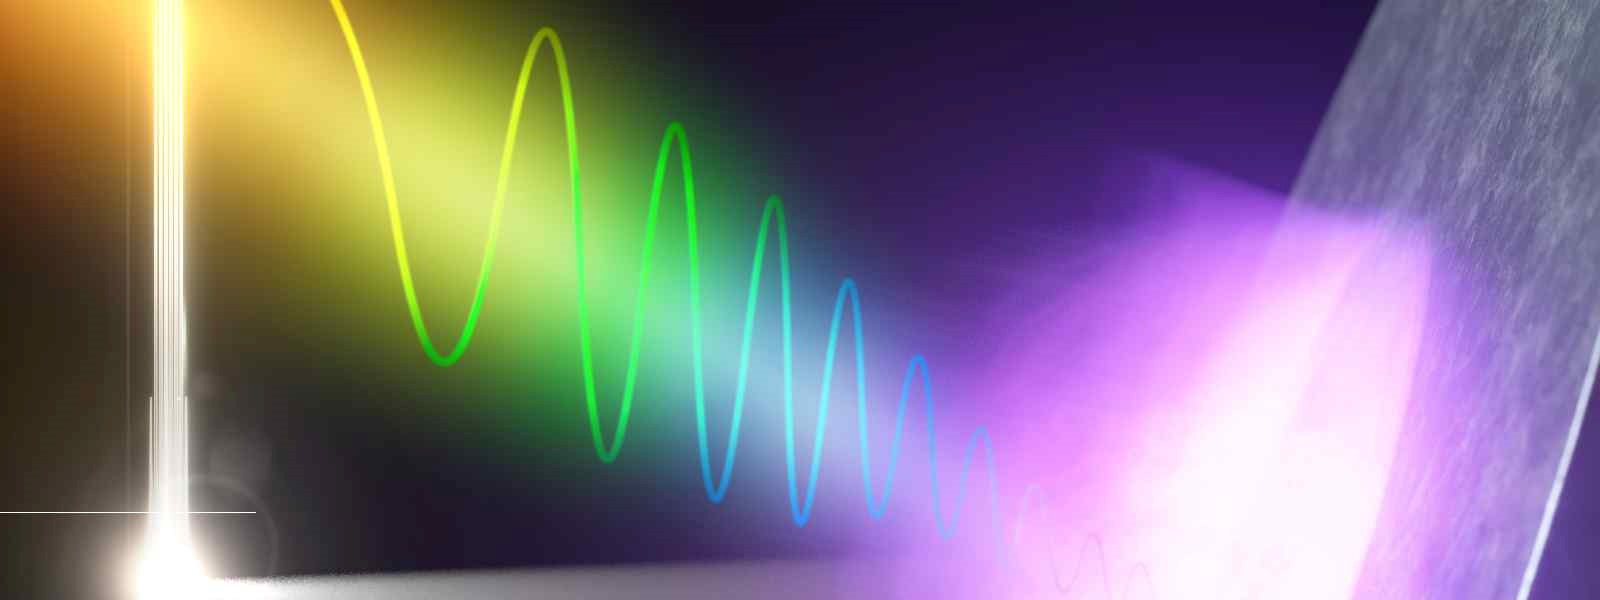 Laser Pulse Compression with Plasma Puts Zettawatt Powers Within Reach